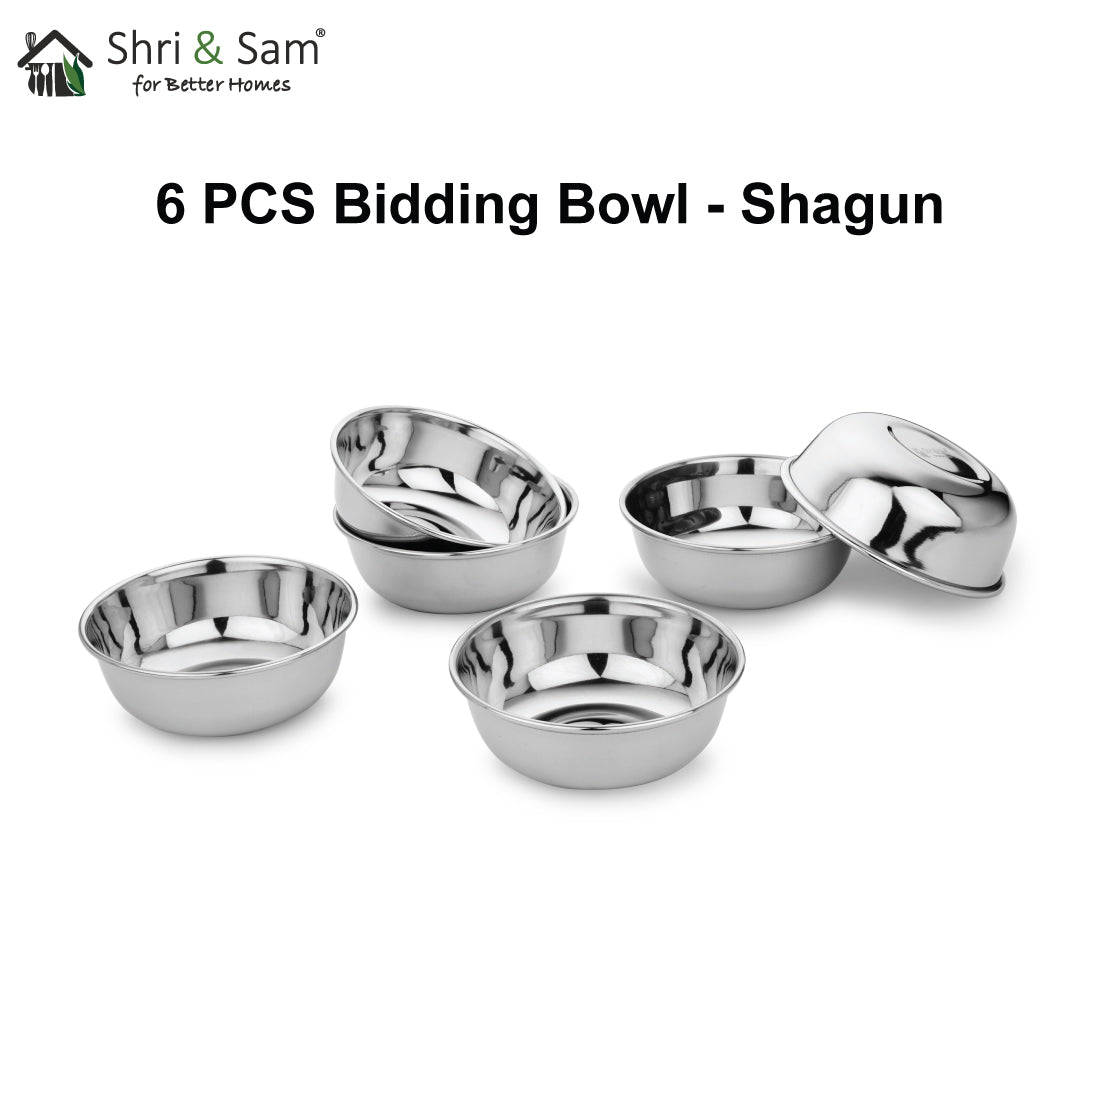 Stainless Steel 6 PCS Bidding Bowl Shagun